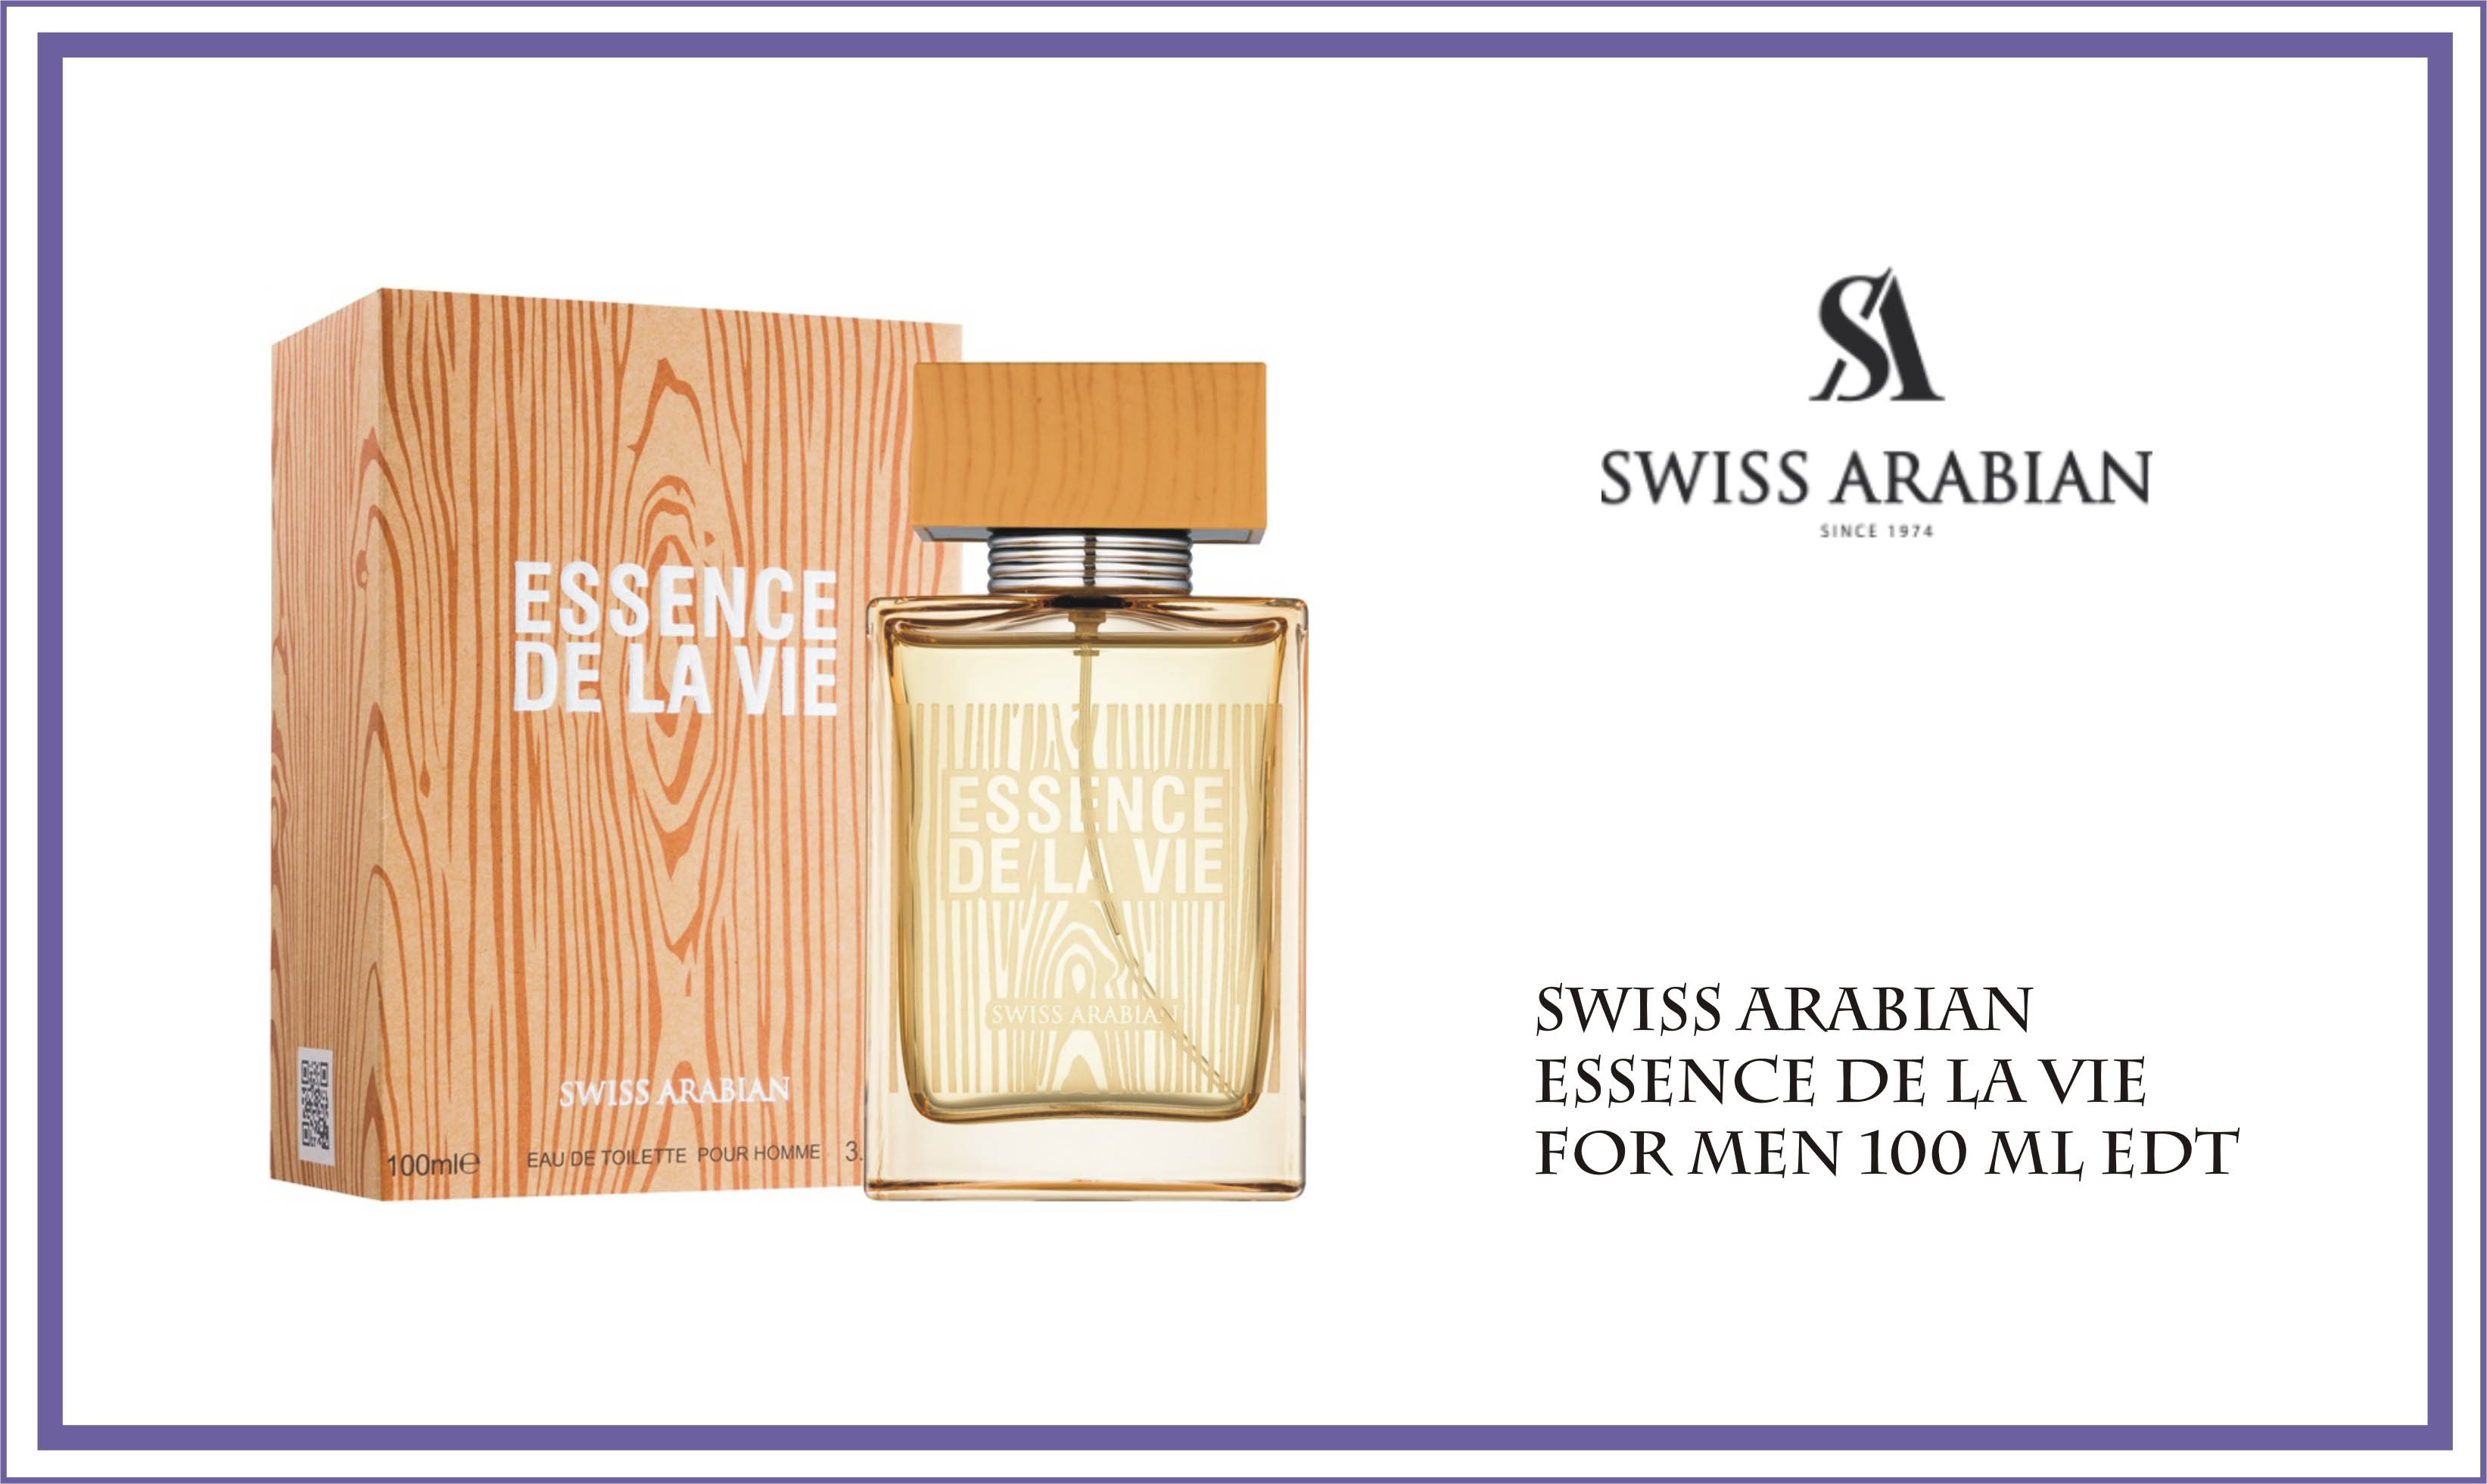 swiss-arabian-essence-de-la-vie-perfume-for-men-100-ml-edp